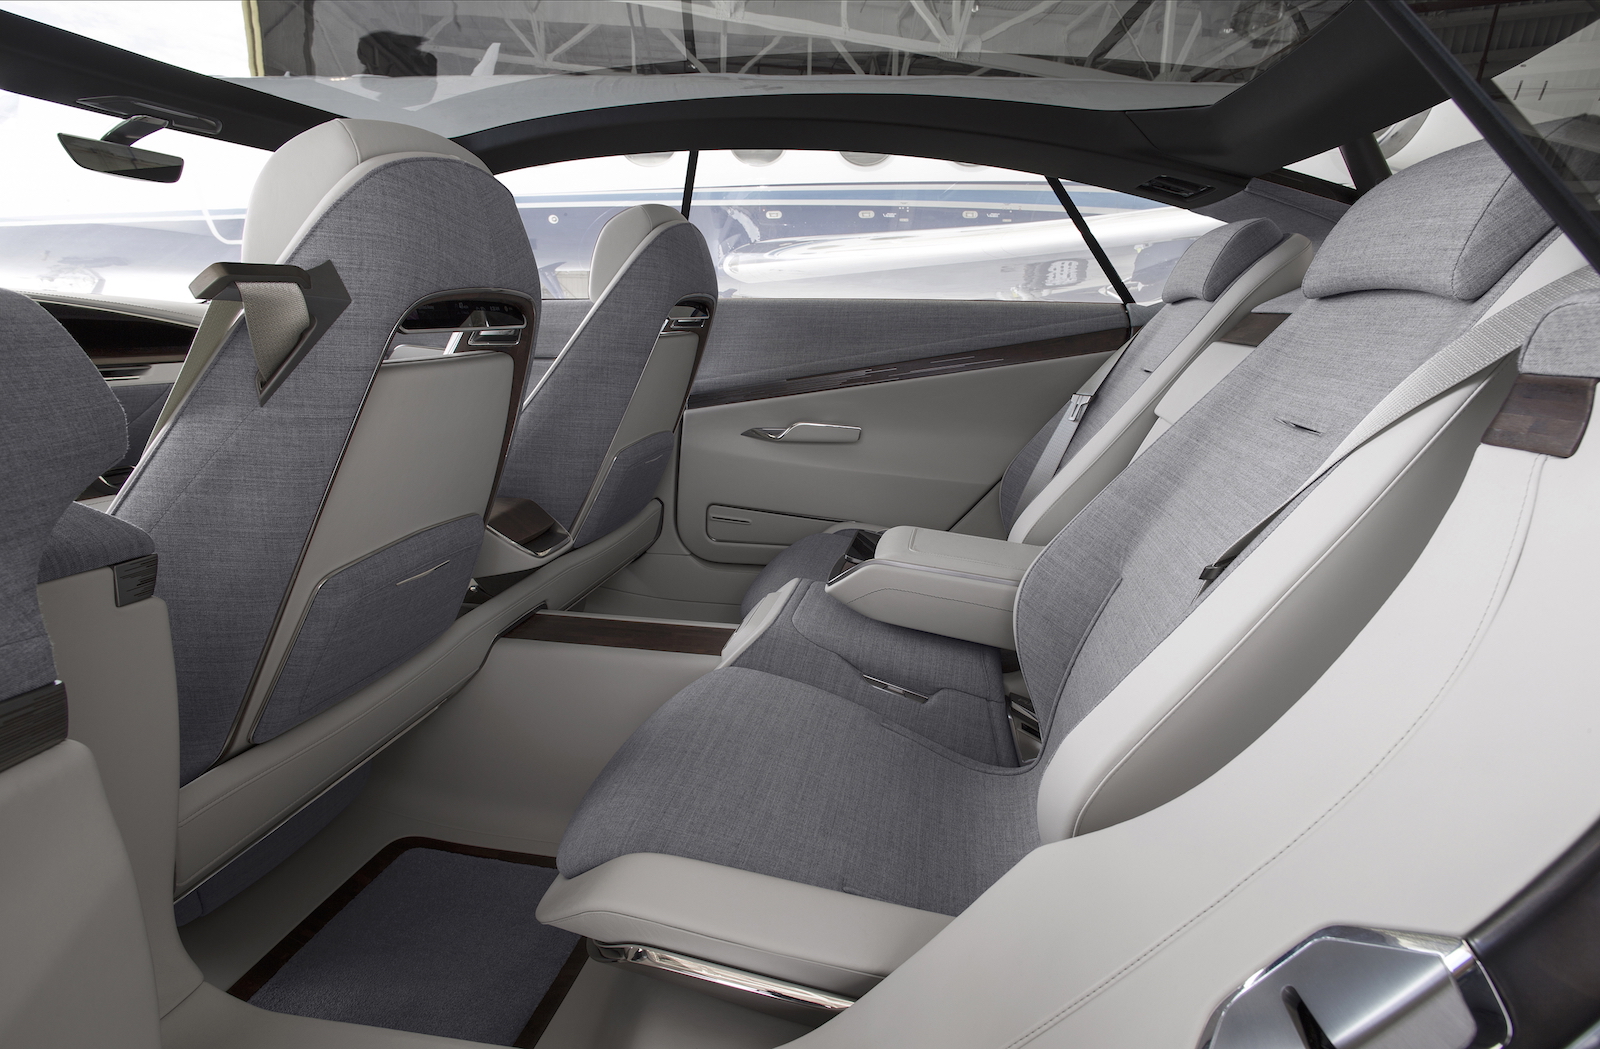 Cadillacâs Escala concept previews craftsmanship and technical ideas in development for future models.